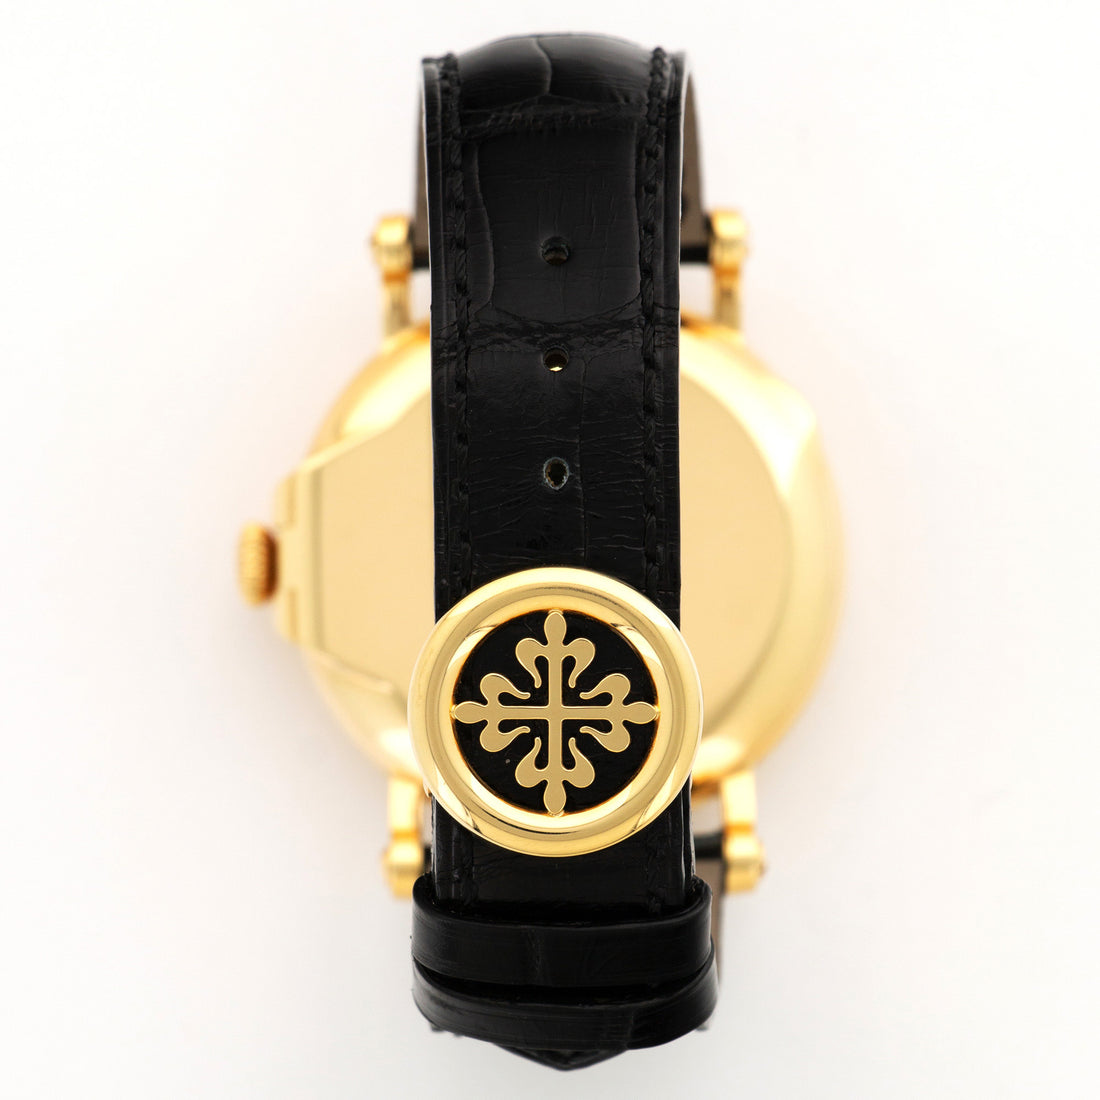 Patek Philippe Yellow Gold Calatrava Watch Ref. 5153